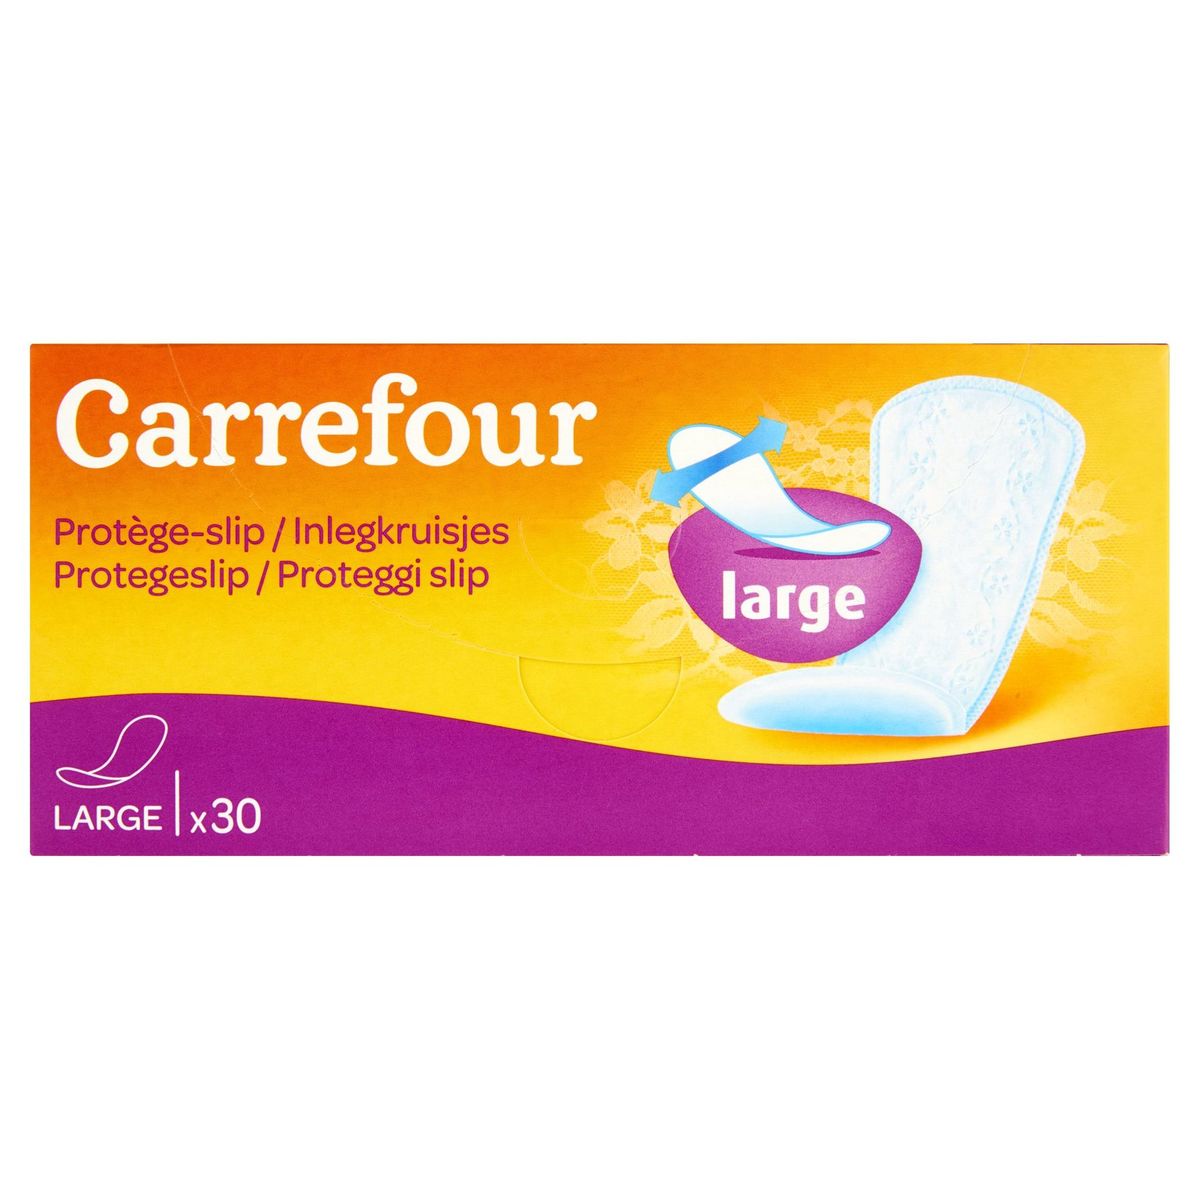 Carrefour Inlegkruisjes Large x 30